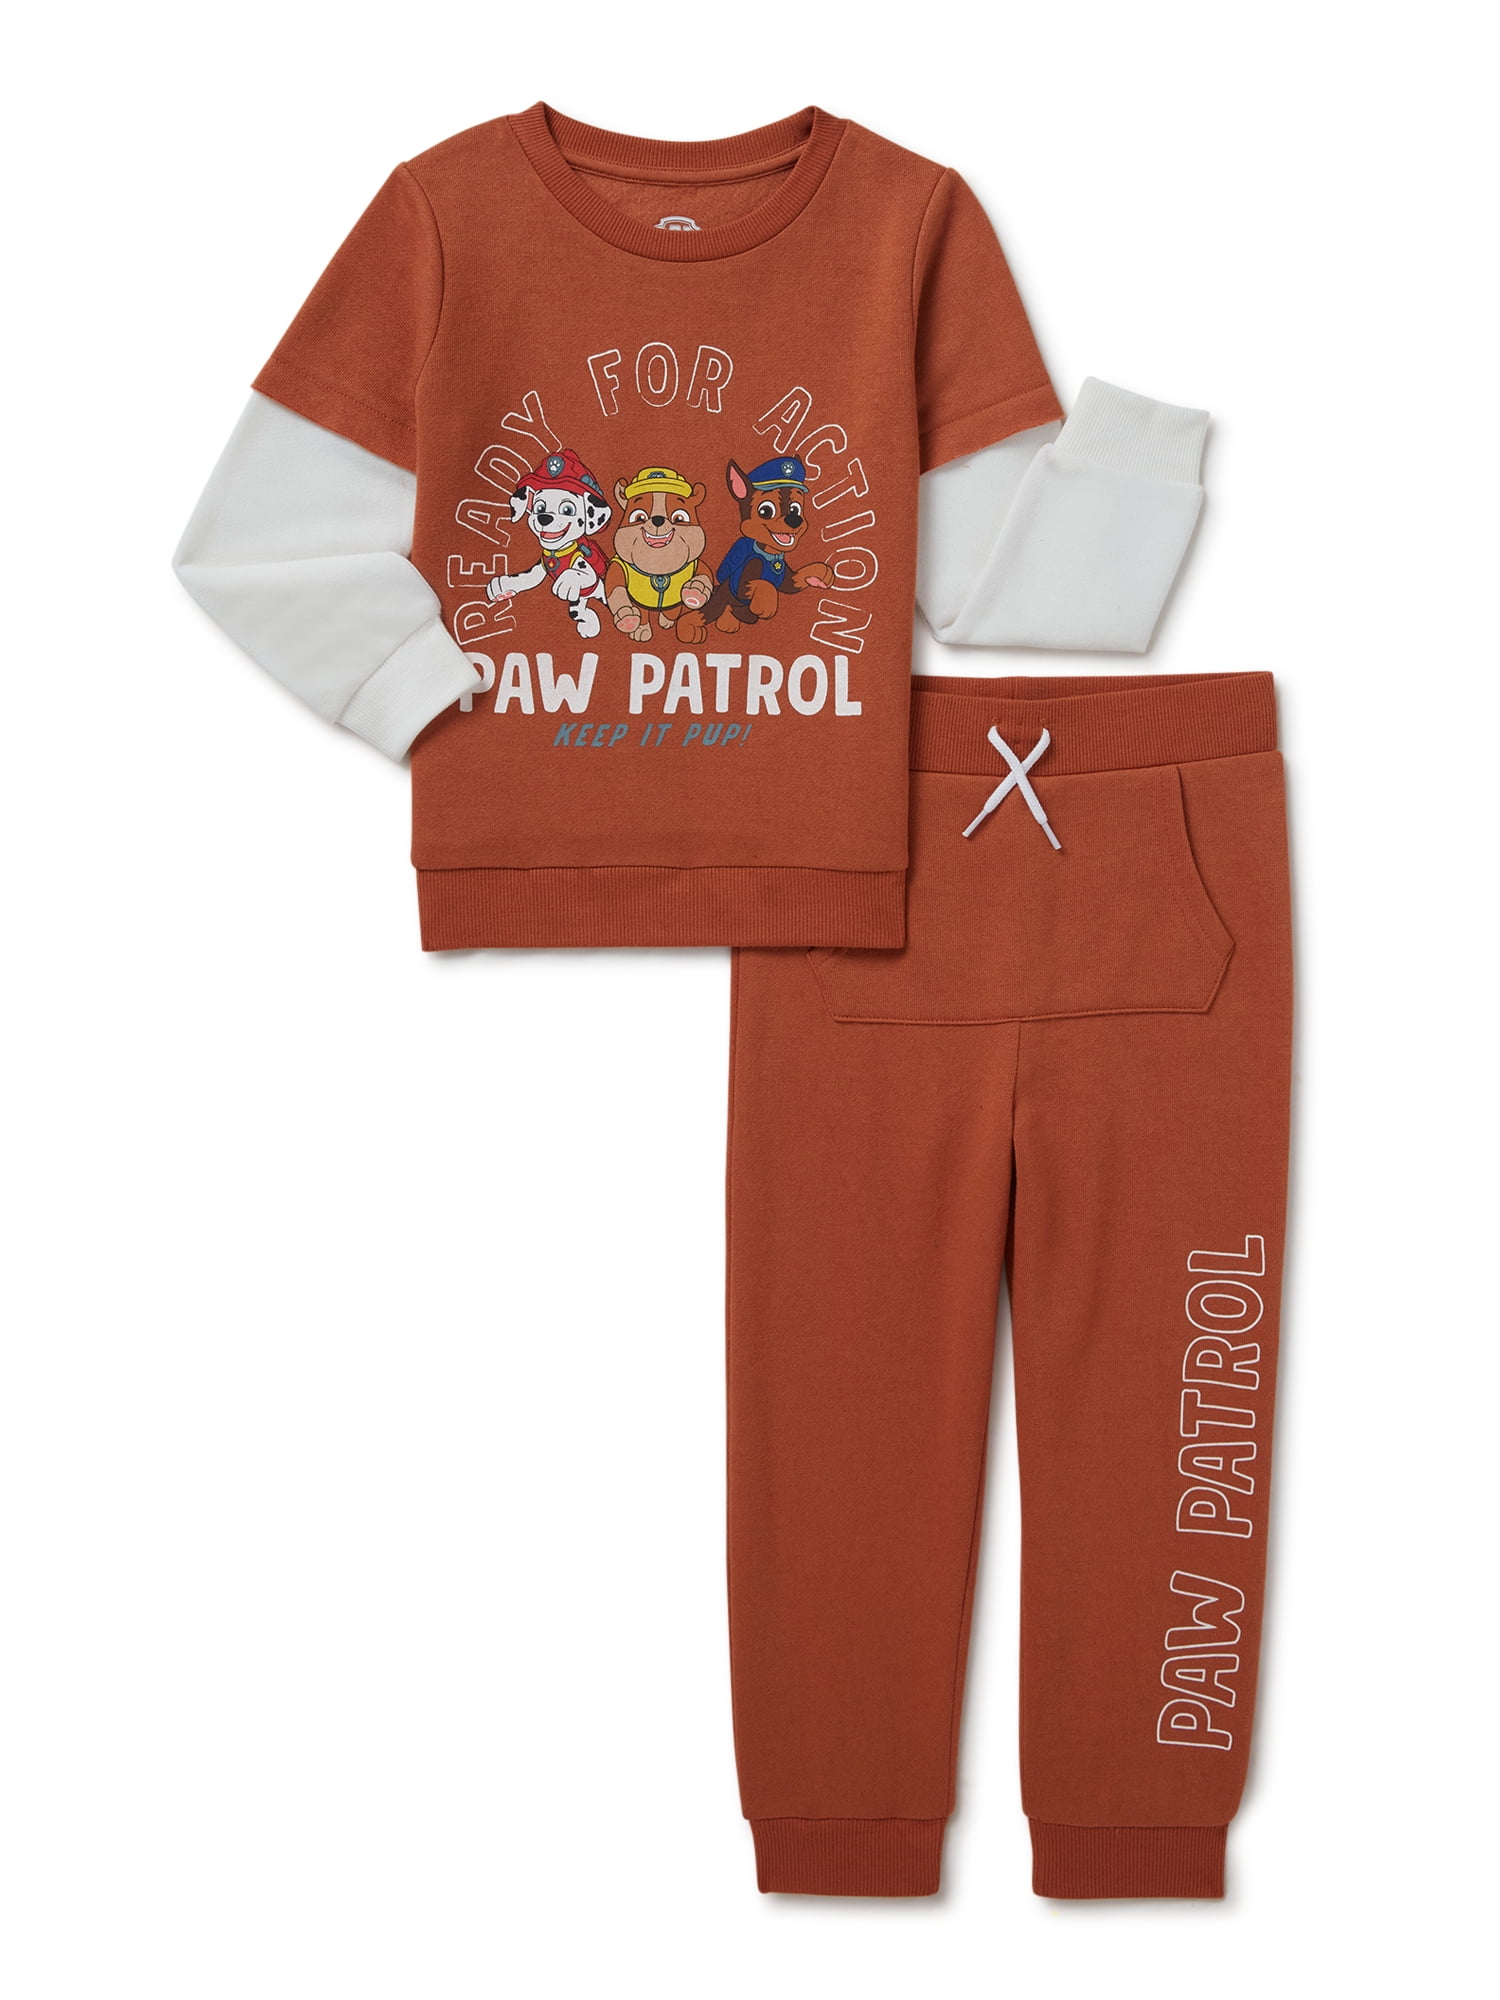 Paw Patrol Toddler Boys Fleece Hoodie Sizes 12M-5T - Walmart.com